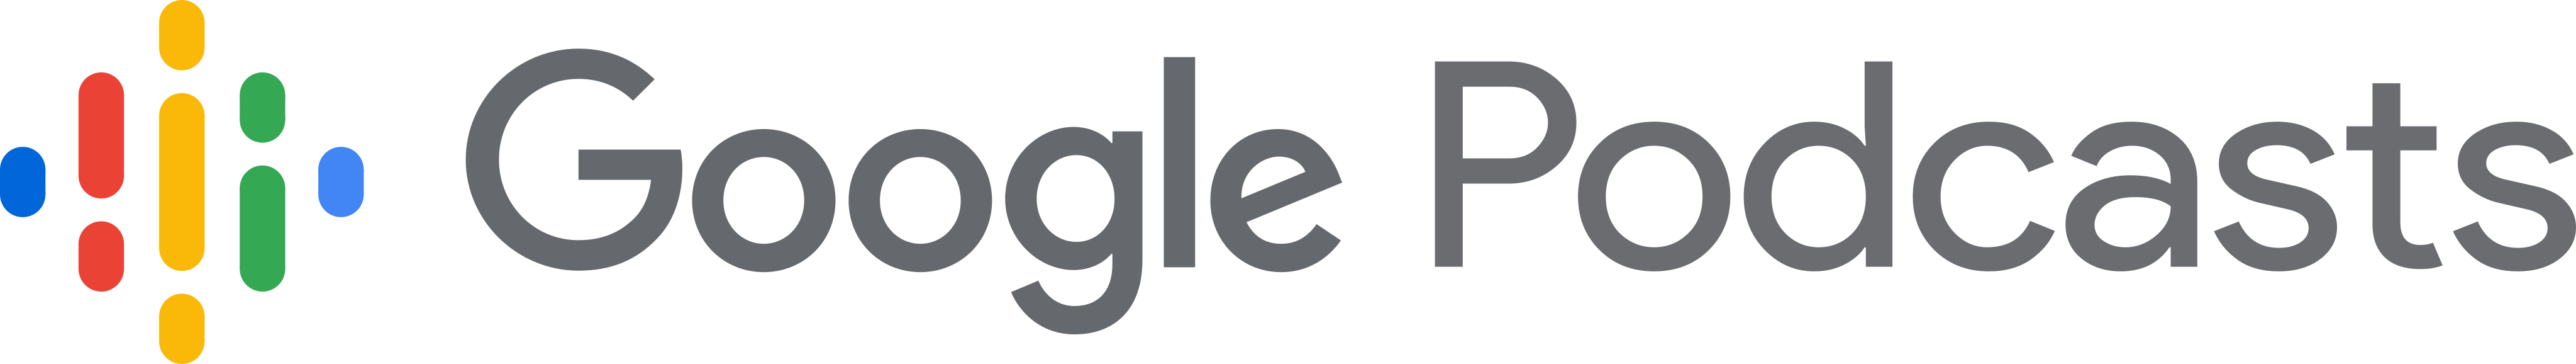 google-podcasts-logo.png